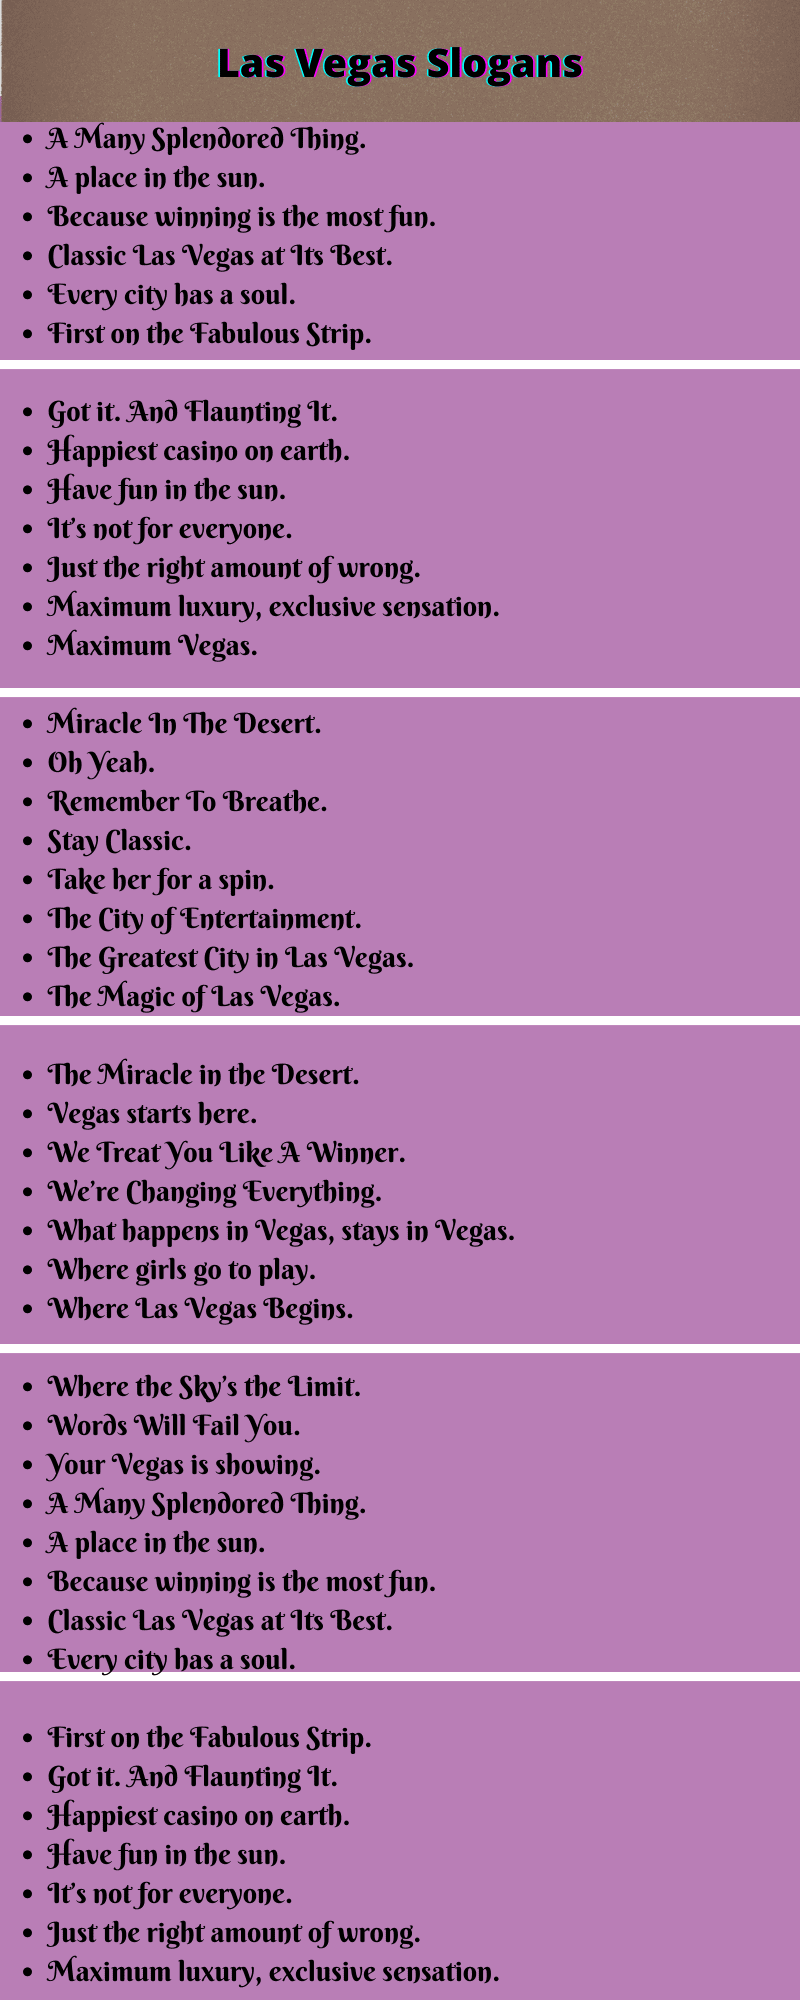 Las Vegas Slogans